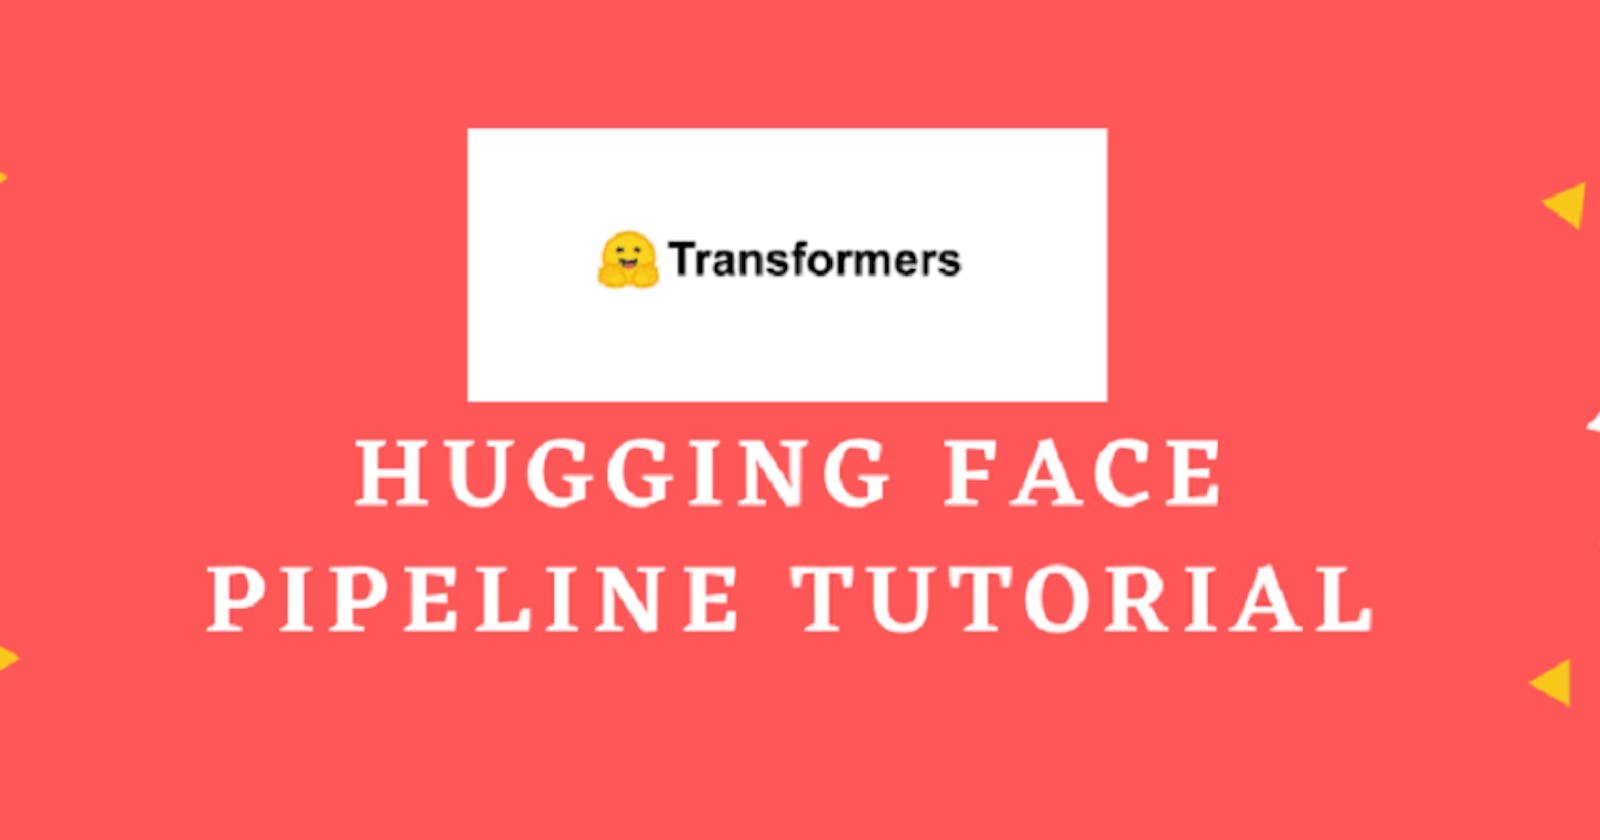 5 NLP tasks using Hugging Face pipeline